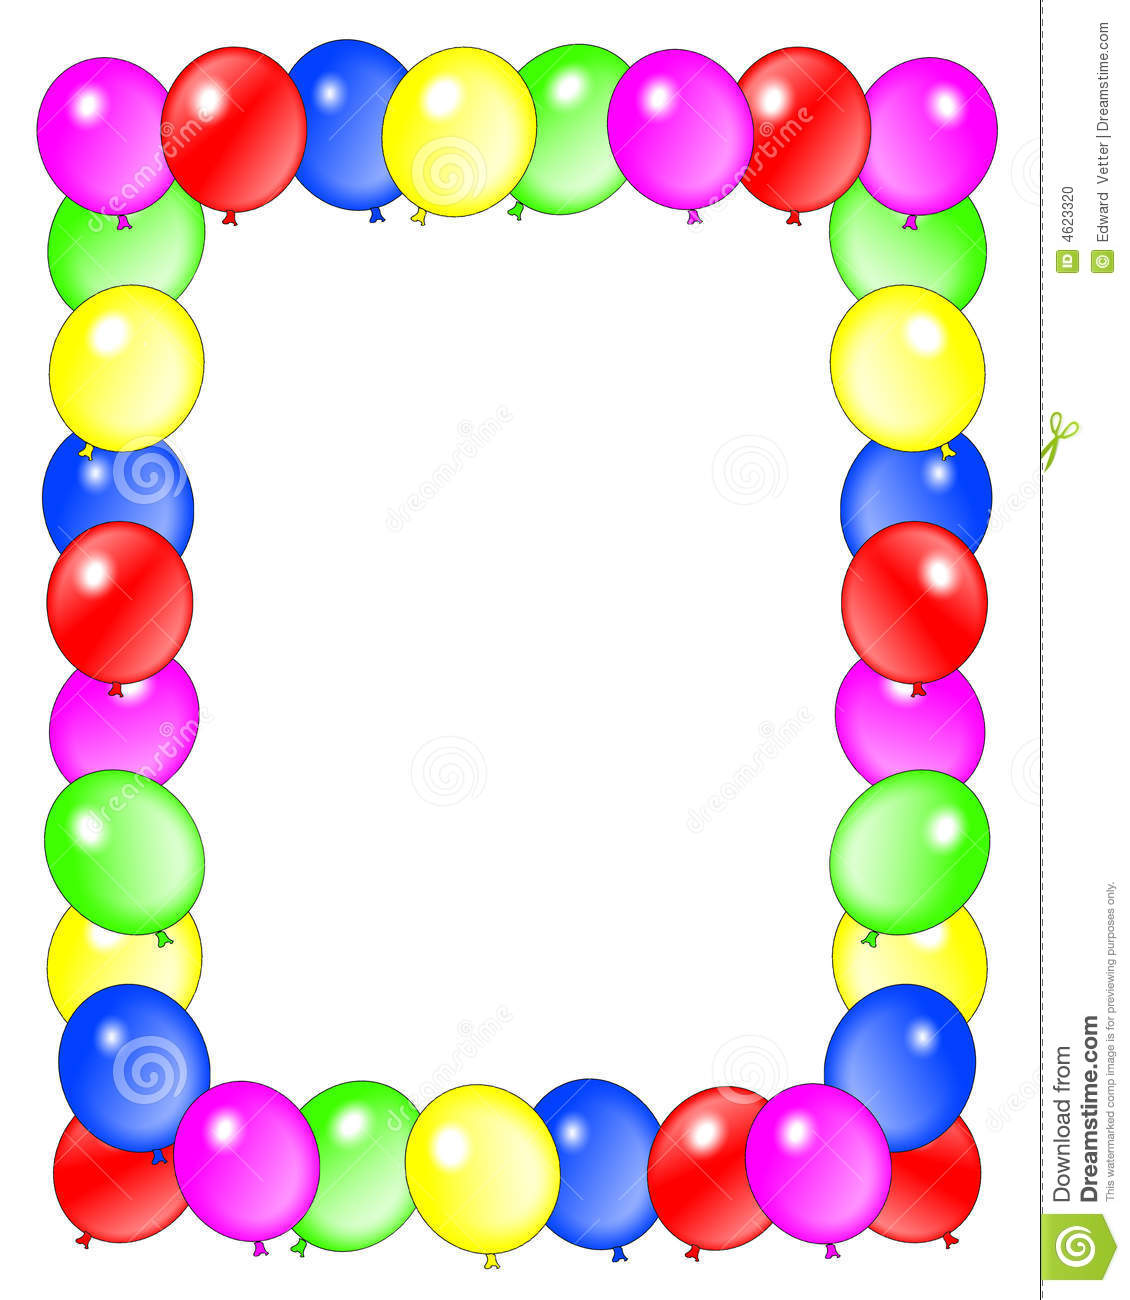 birthday-clip-art-borders-birthday-balloons-border-frame-